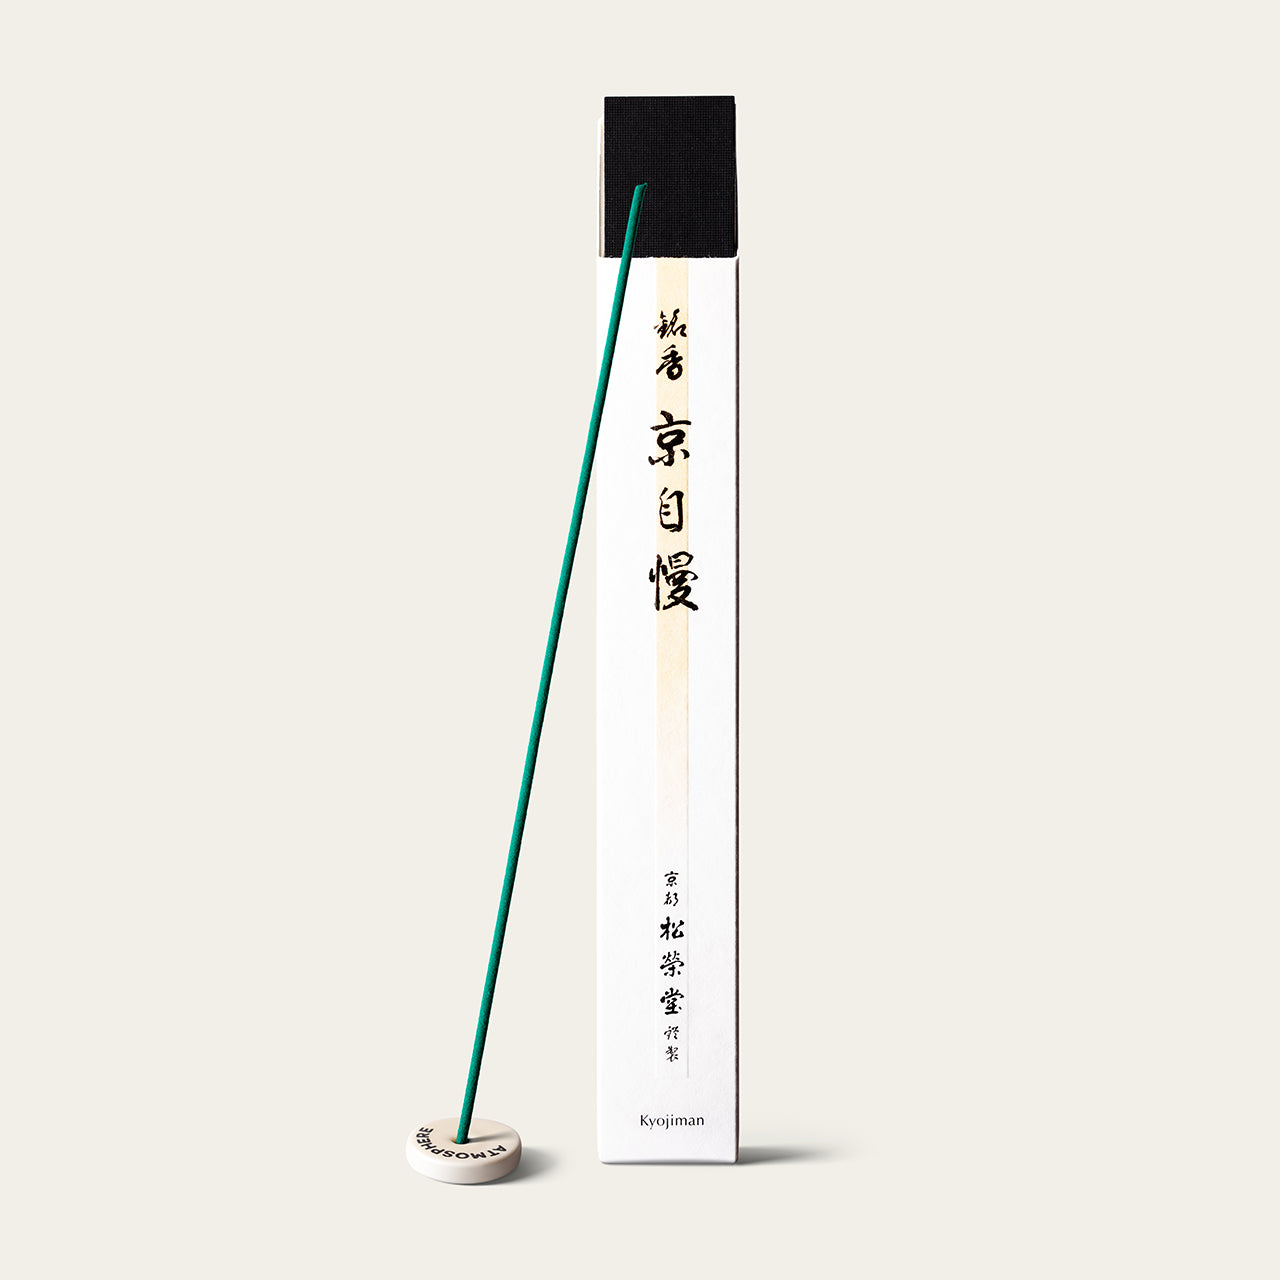 Shoyeido Premium Pride of Kyoto Kyojiman Japanese incense sticks (36 sticks) with Atmosphere ceramic incense holder